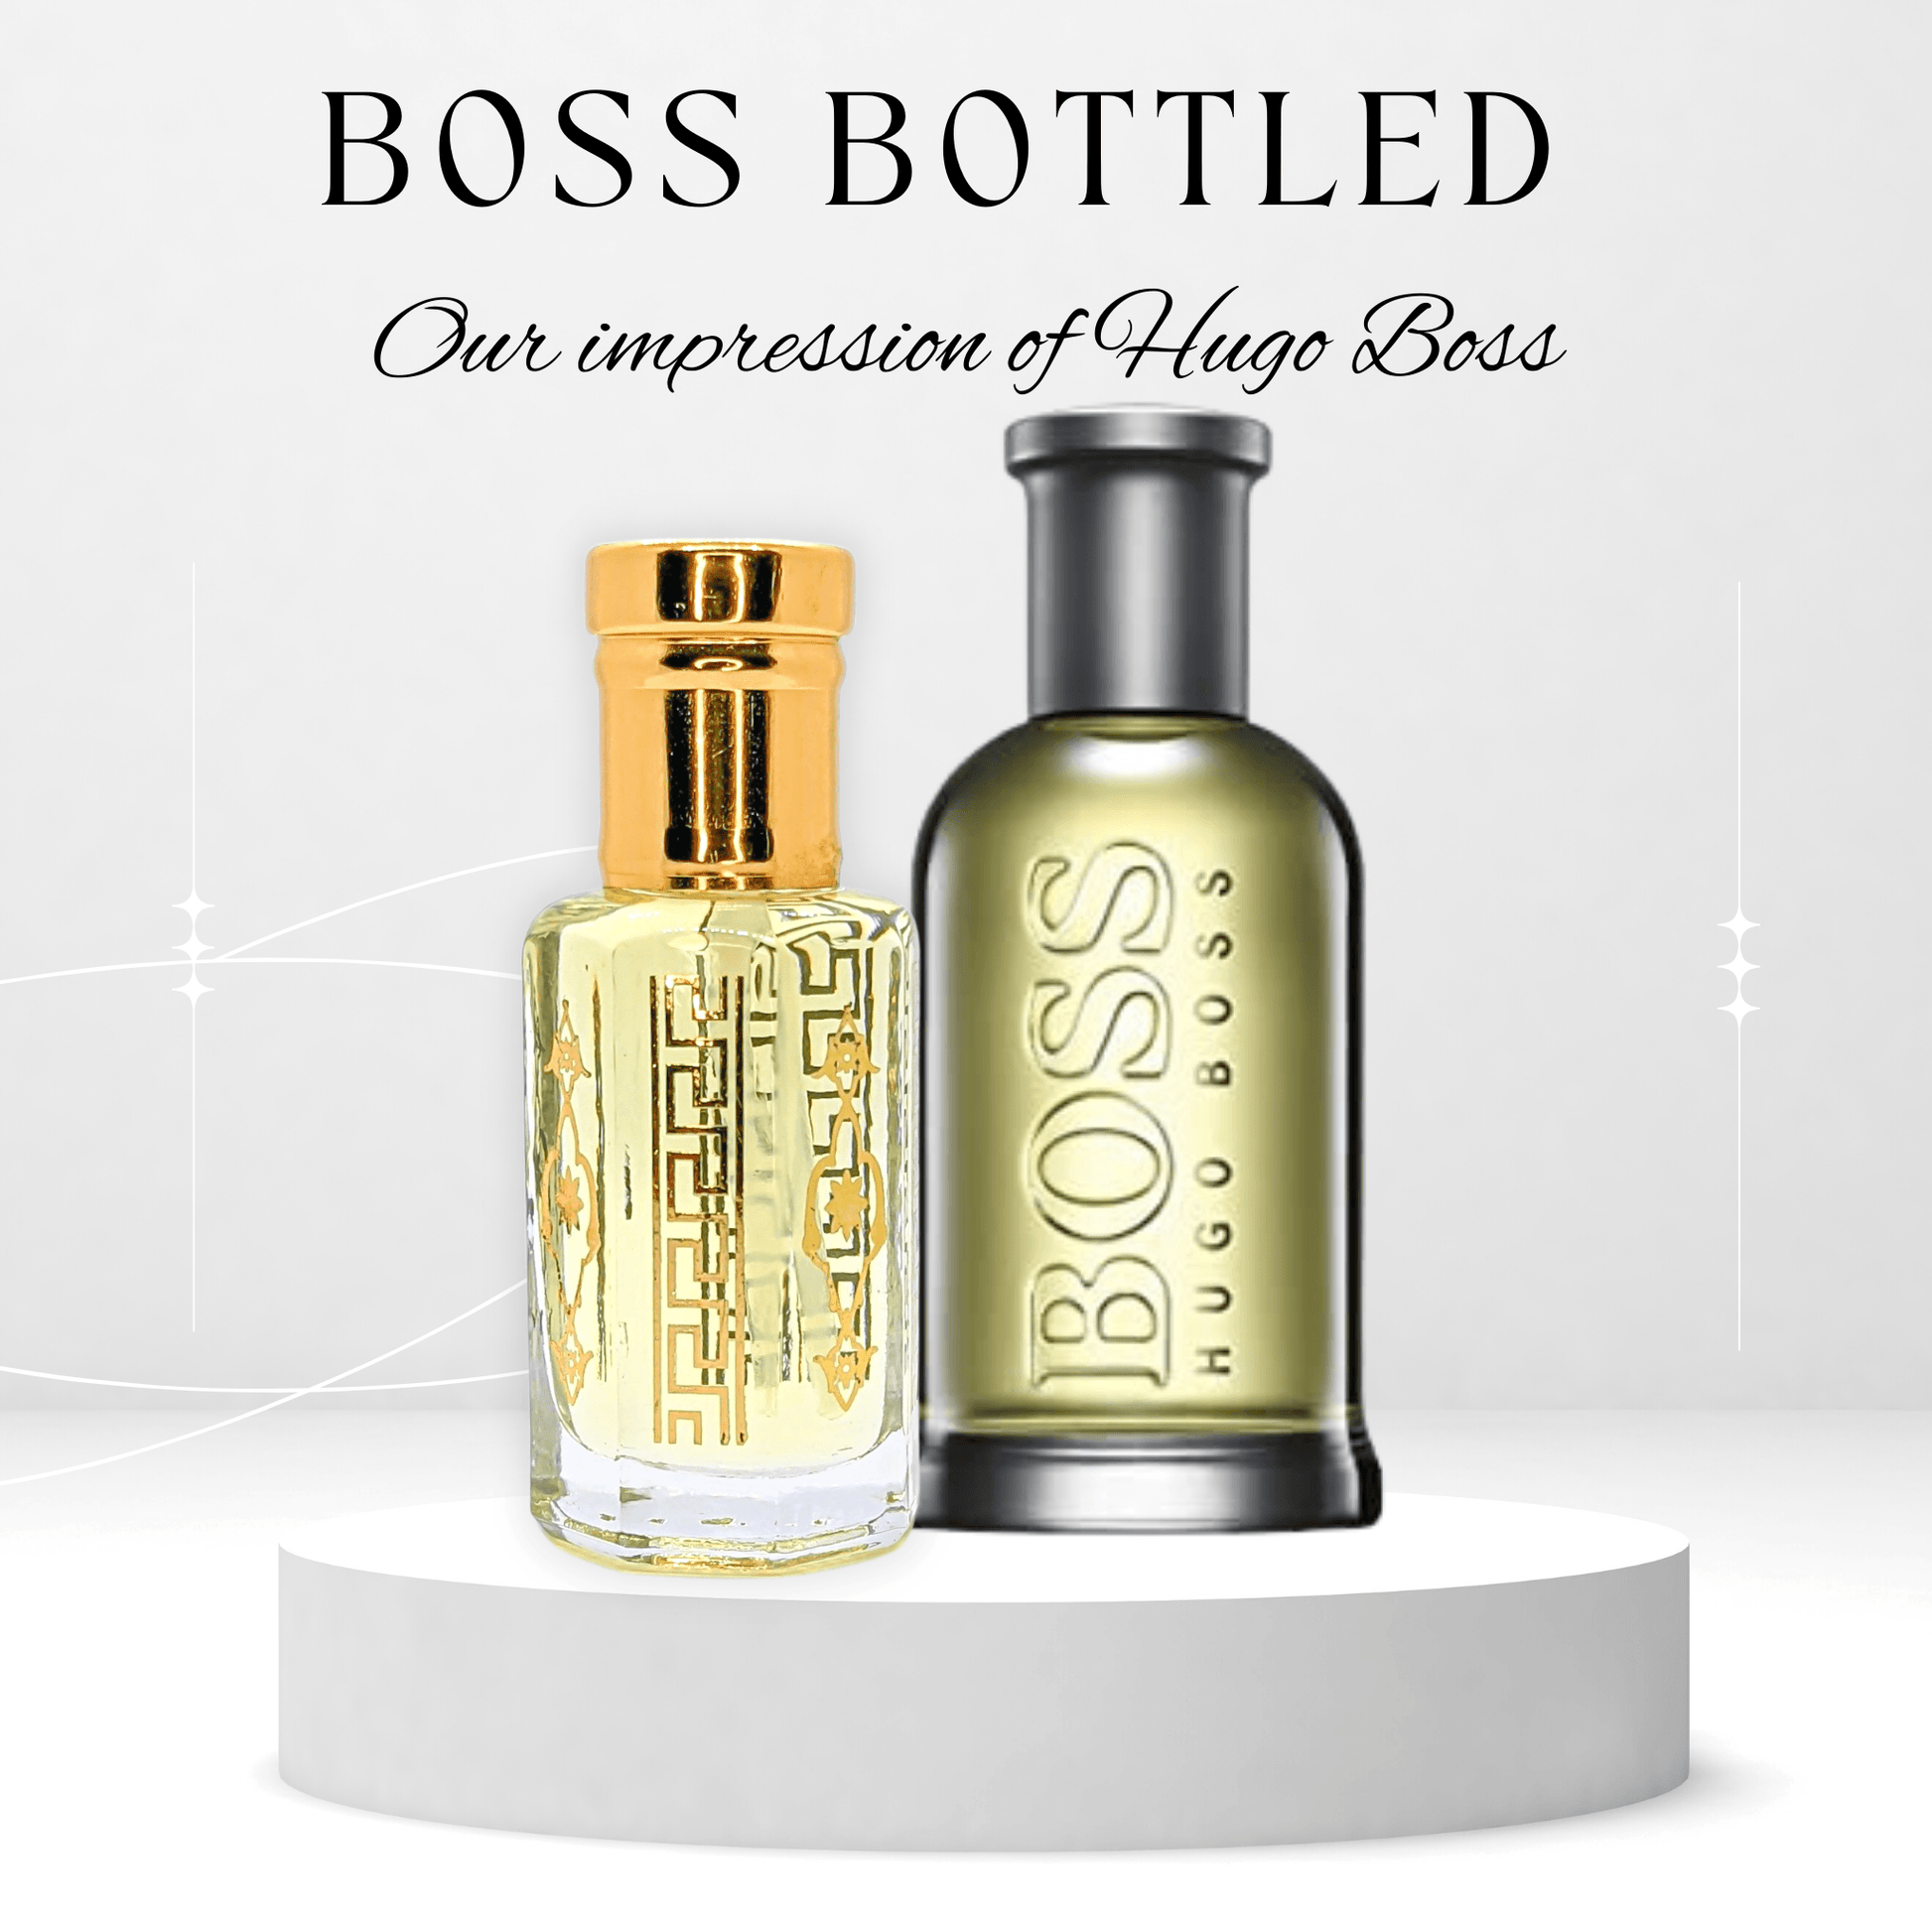 BOSS BOTTLED Our impression of Hugo Boss - Ibn Al Jebouri Perfumes